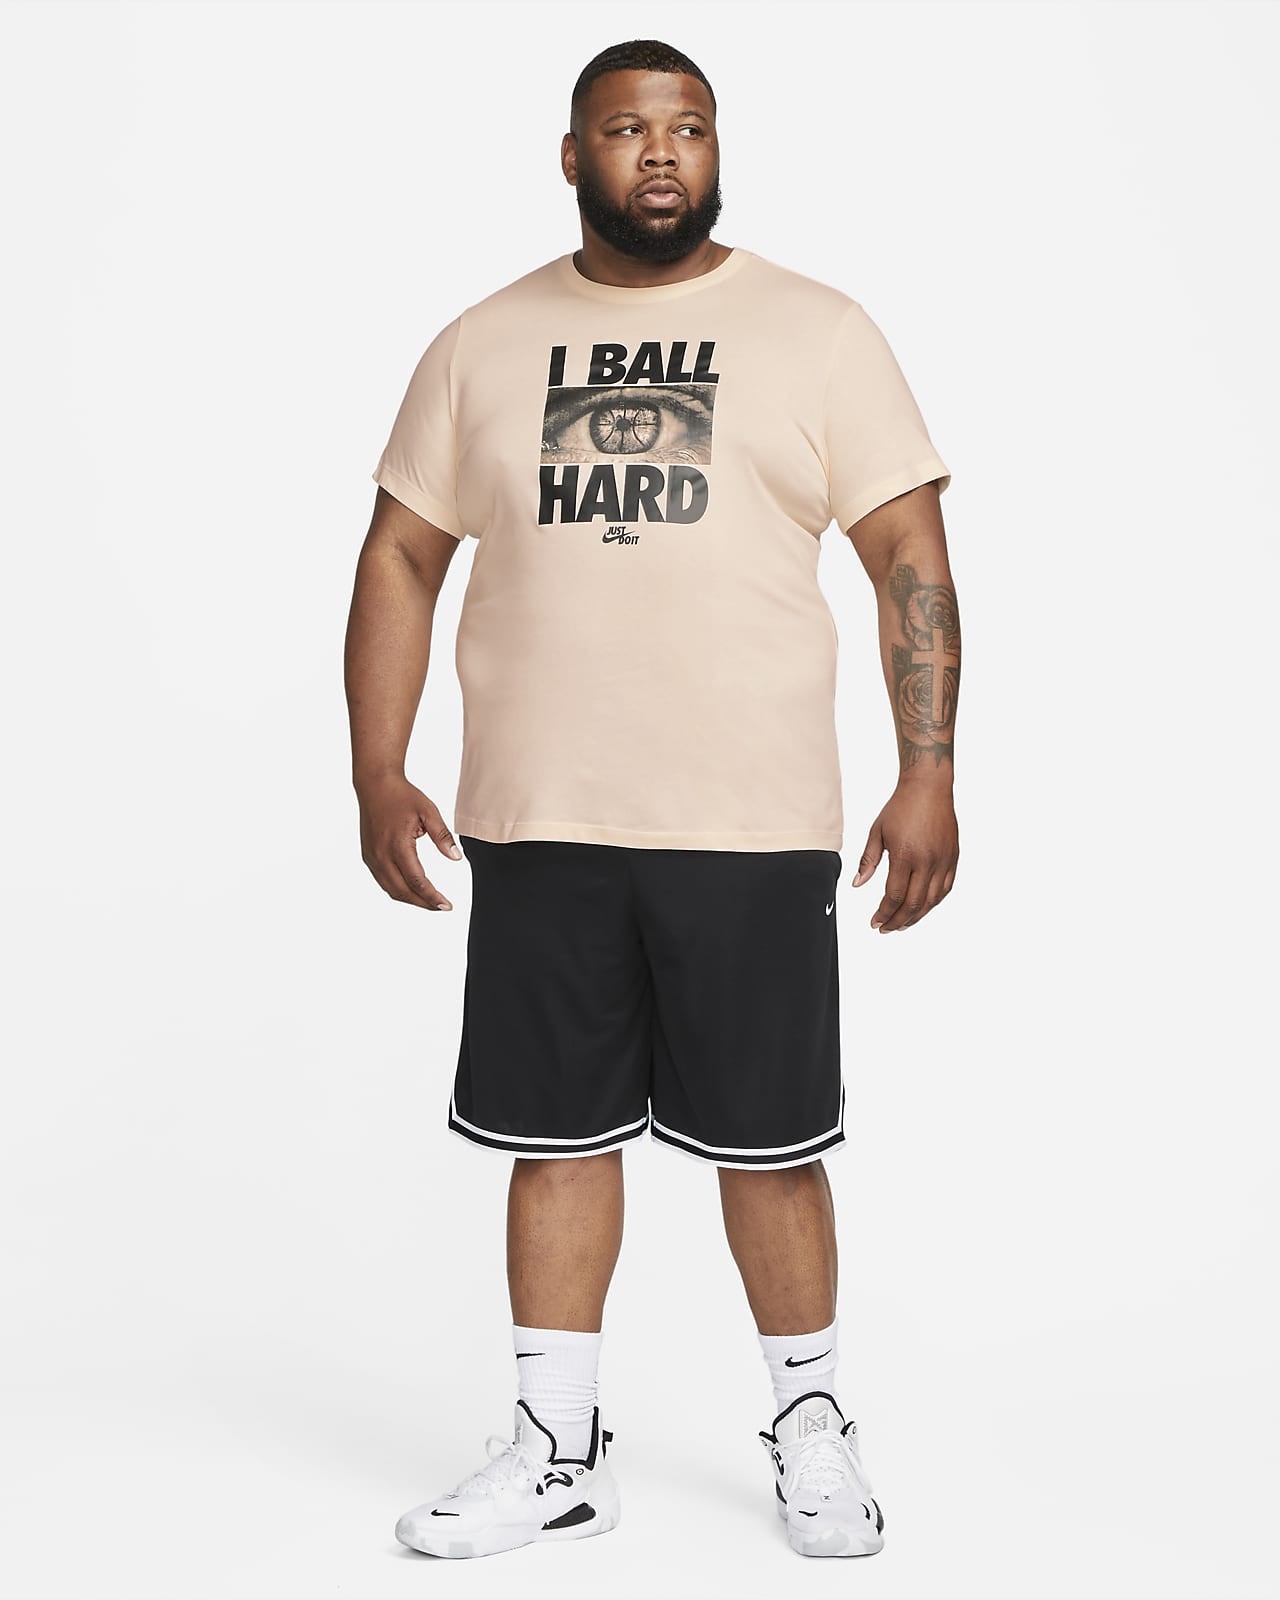 LeBron Nike Dri-FIT Men's Basketball T-Shirt